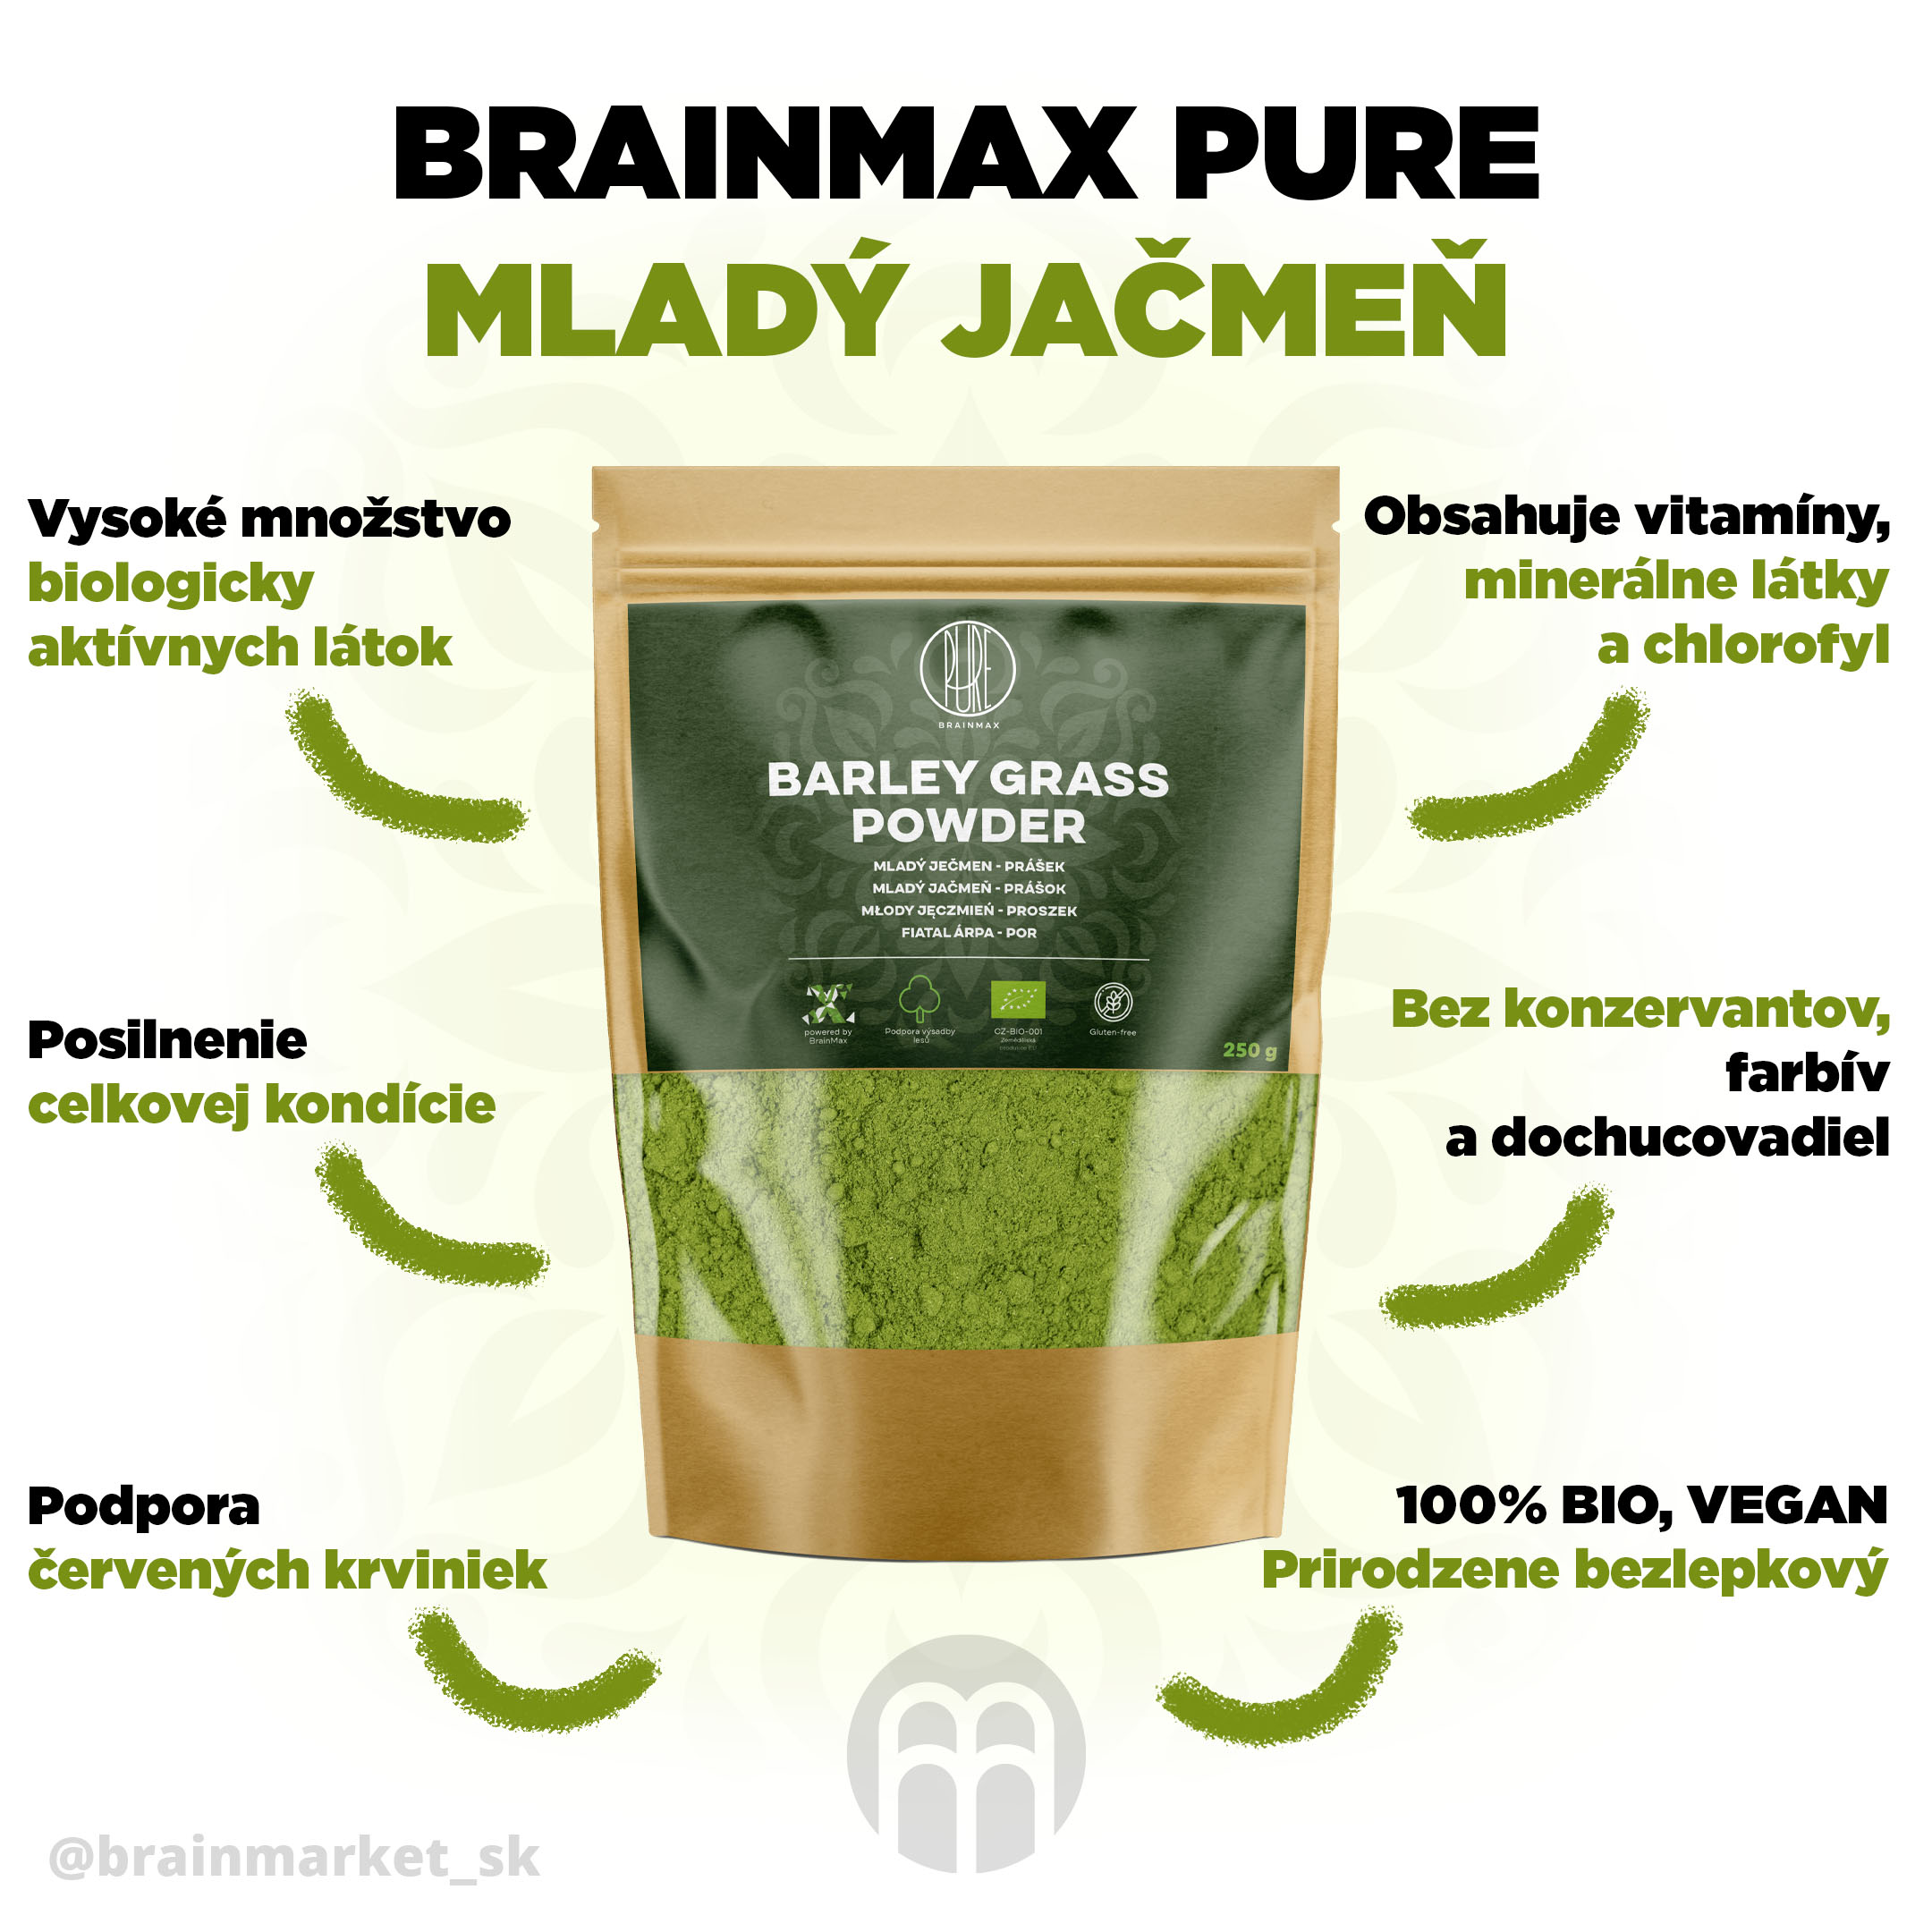 brainmax pure mlady jecmen (doztracena) infografika brainmarket SK